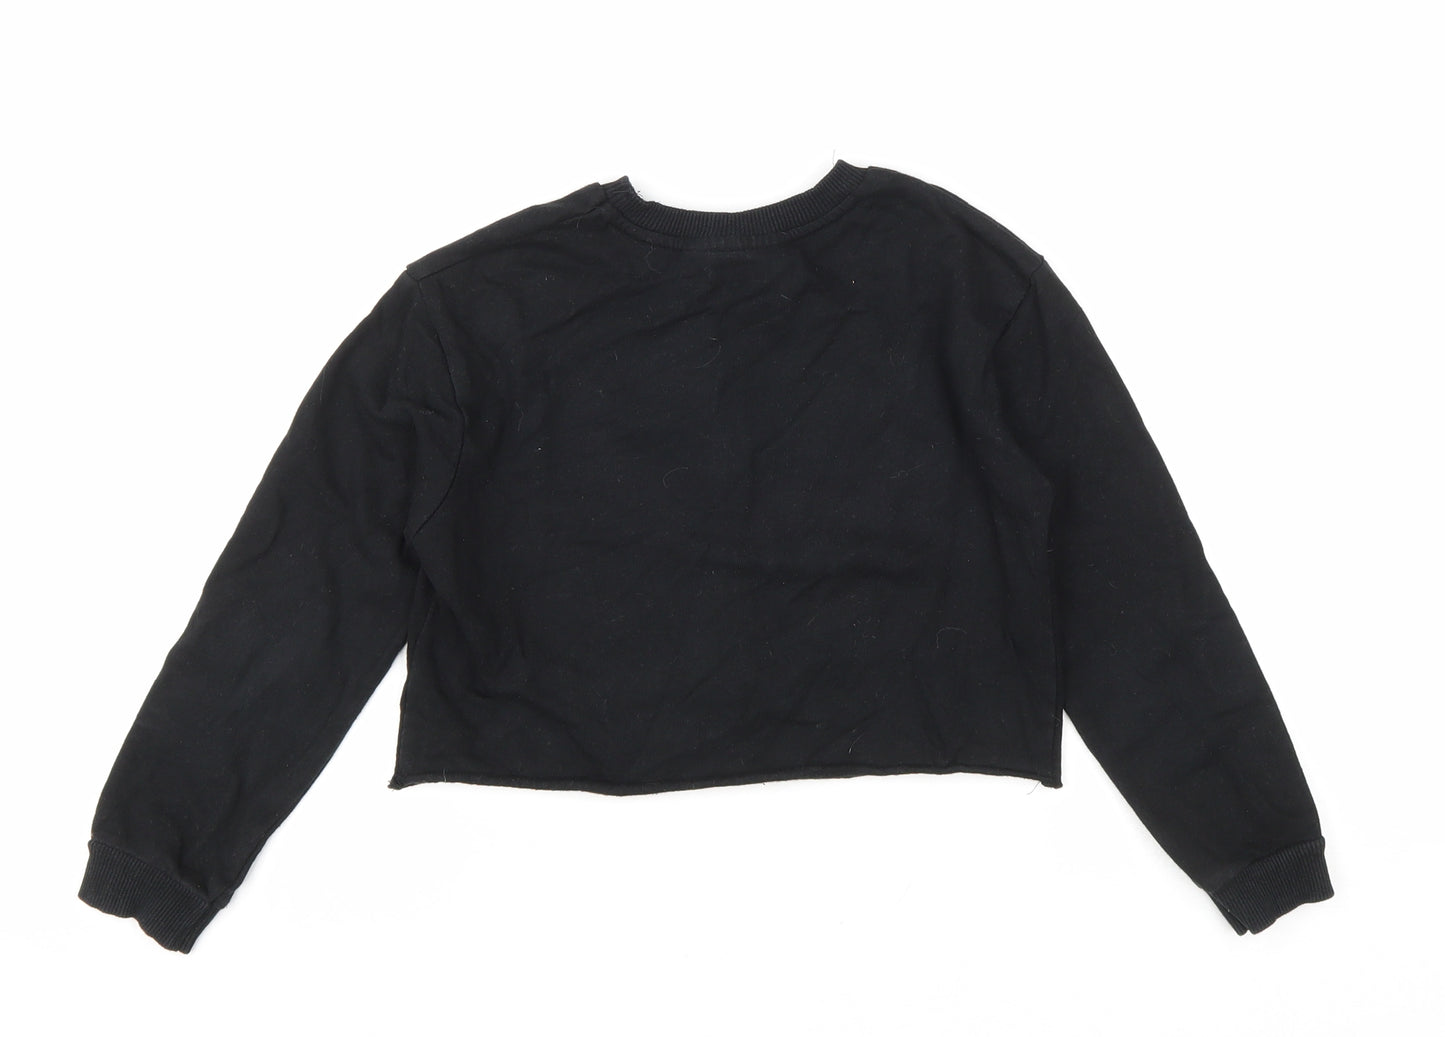 Preworn Girls Black Cotton Pullover Sweatshirt Size 9-10 Years Pullover - Harry Potter